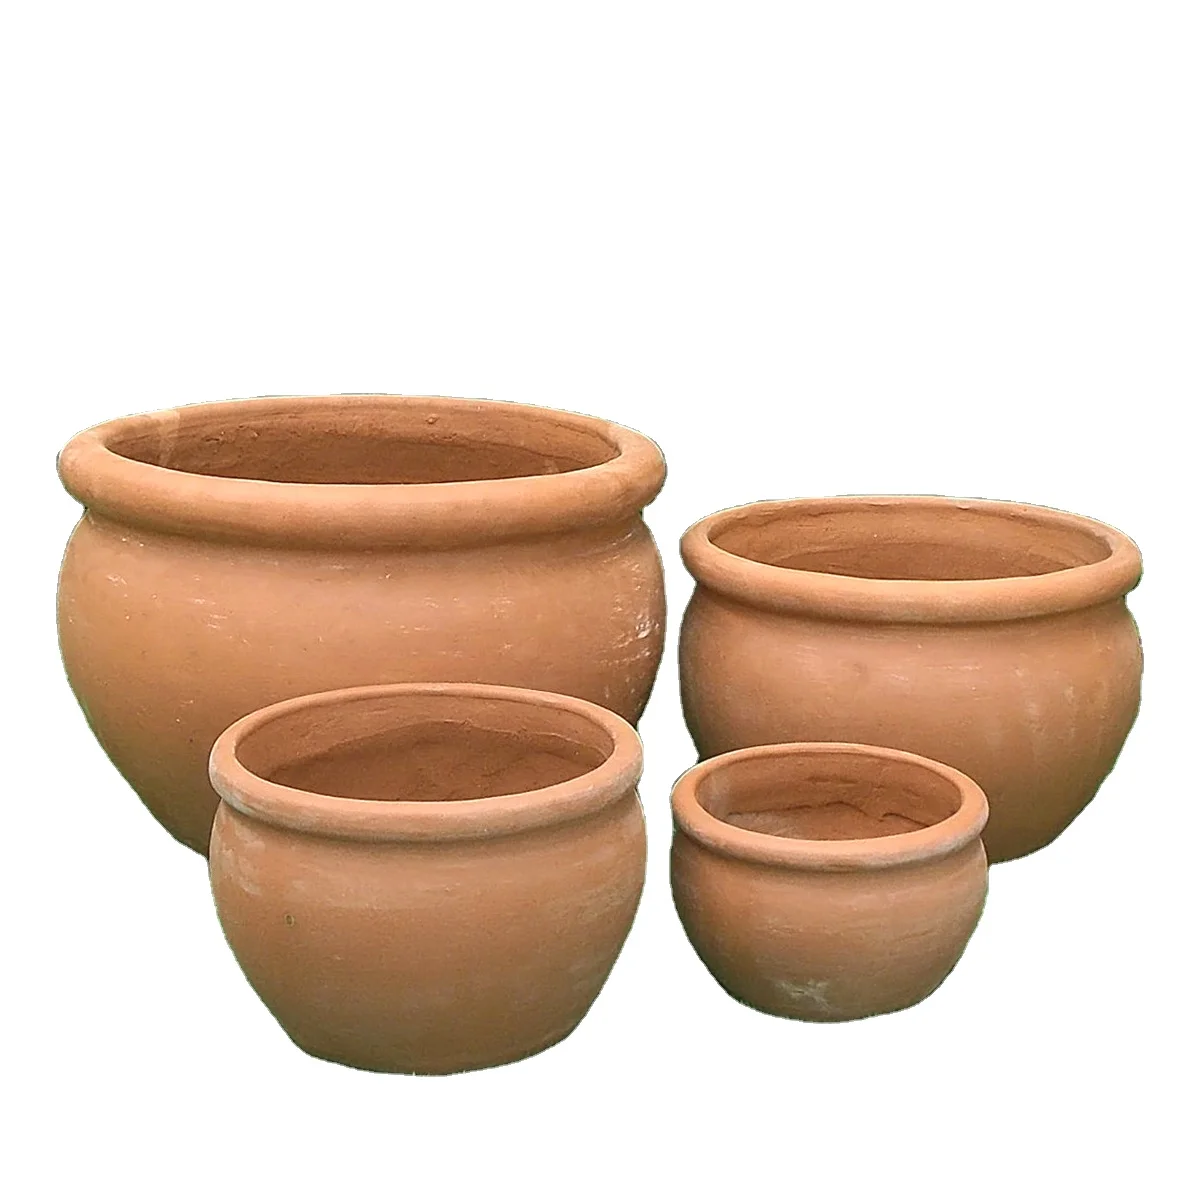 Wholesale Handmade Terracotta Flower Pot Ceramic Indoor and Outdoor Garden Planter for Nursery Decoration